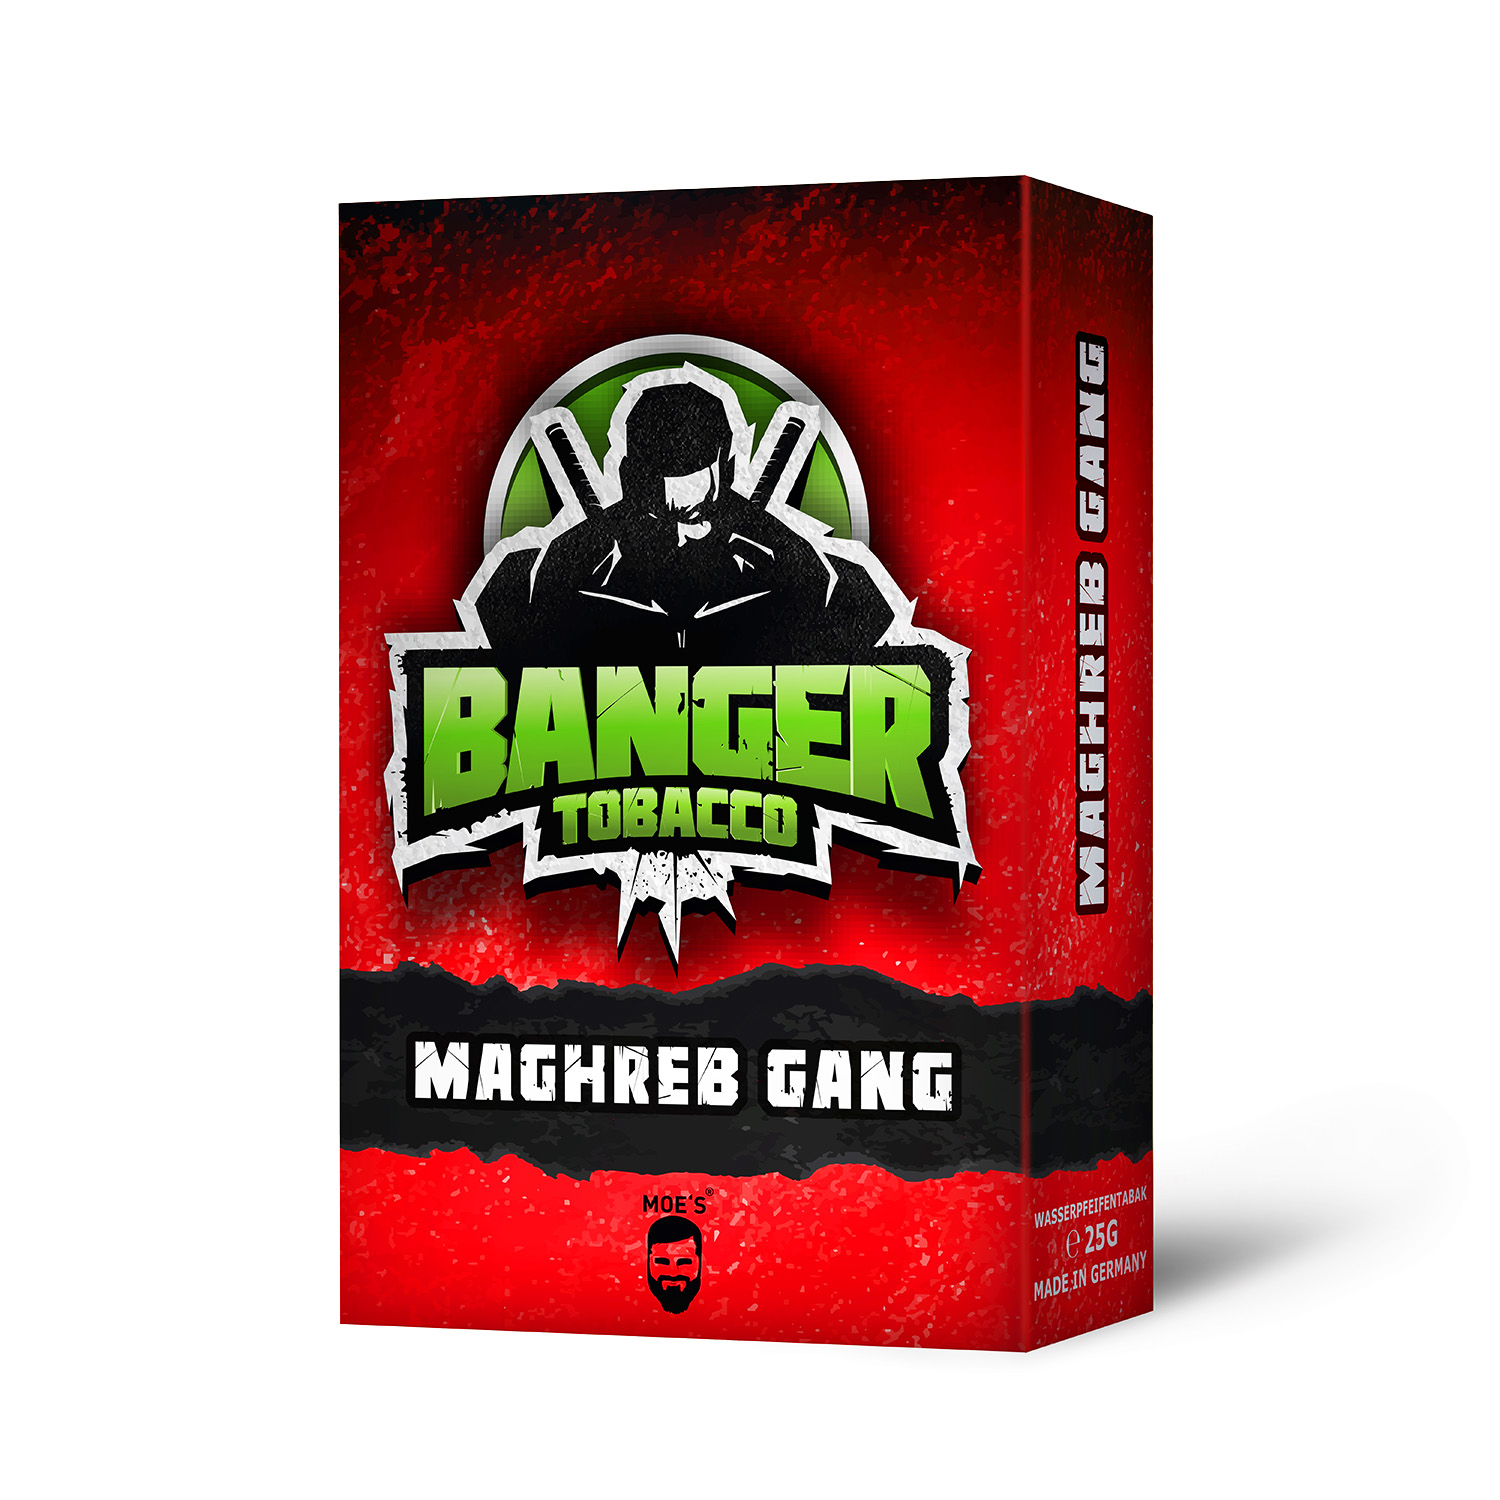 BANGER - MAGHREB GANG